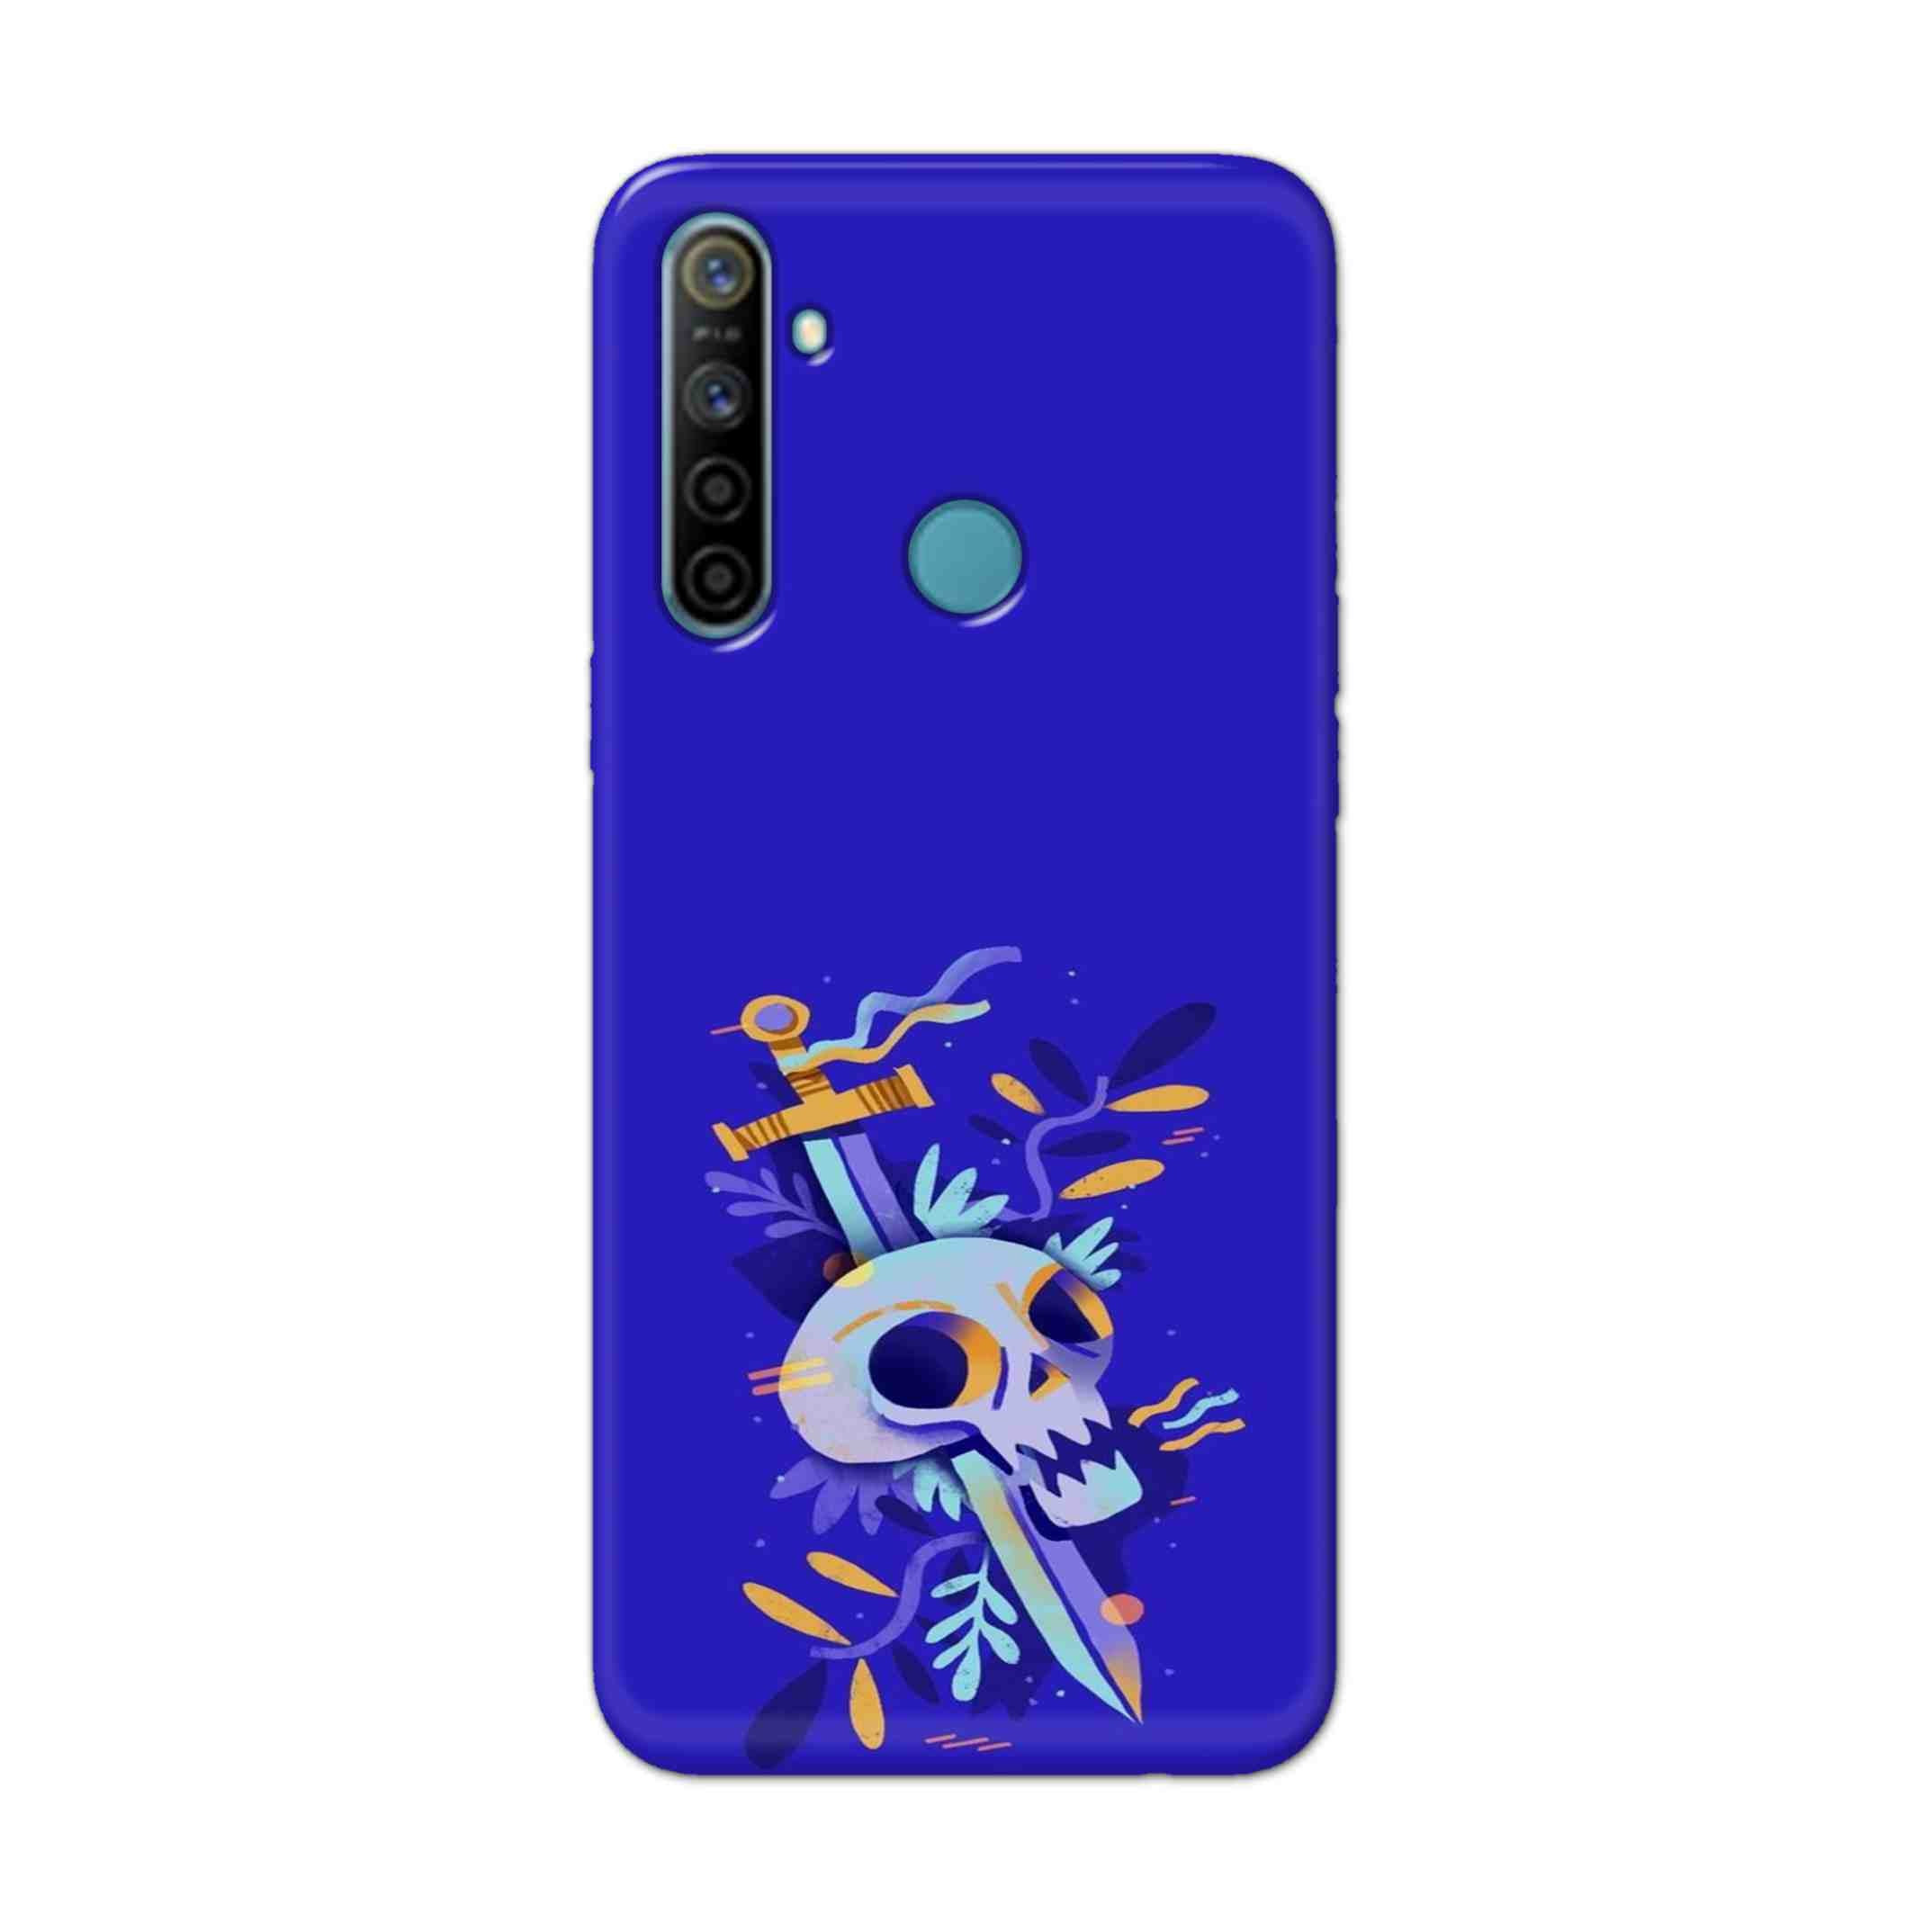 Buy Blue Skull Hard Back Mobile Phone Case Cover For Realme 5i Online